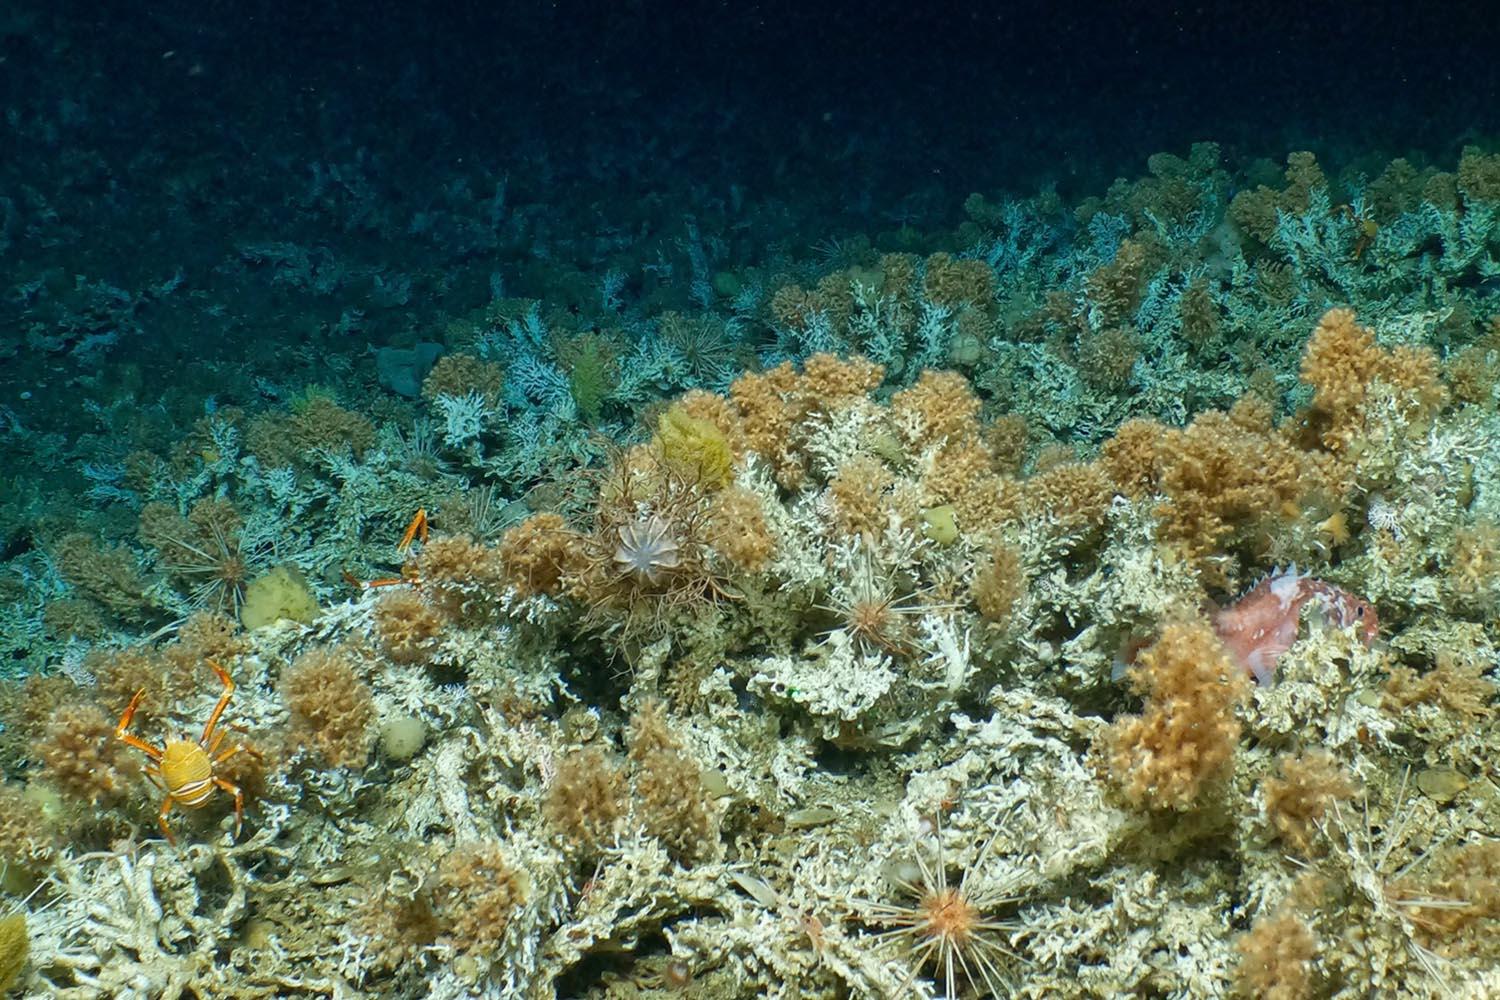 New-pristine-coral-reef-discovered-Ecuador-Galapagos-Islands-SPACEBAR-Hero